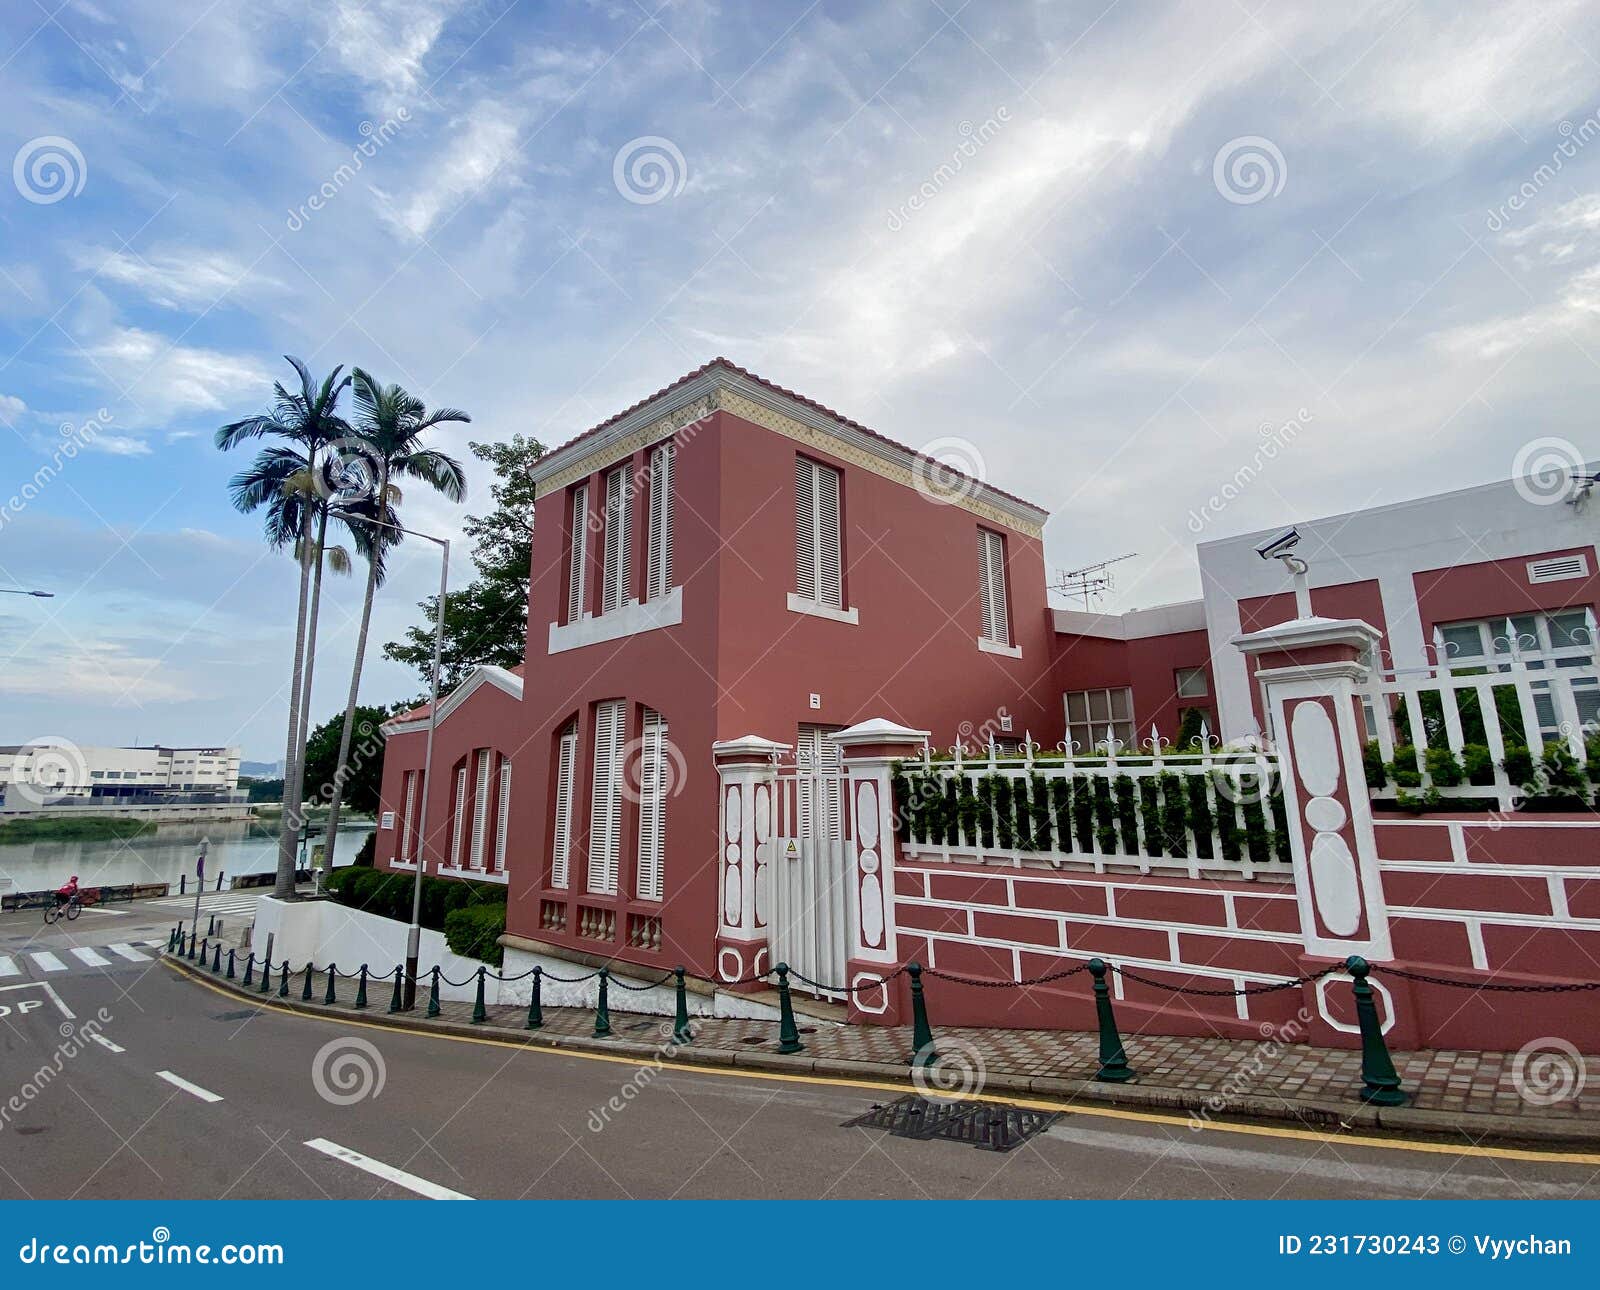 antique portuguese architecture colonial macau heritage building sai van mansion colina da penha hill coastline luxury lifestyle